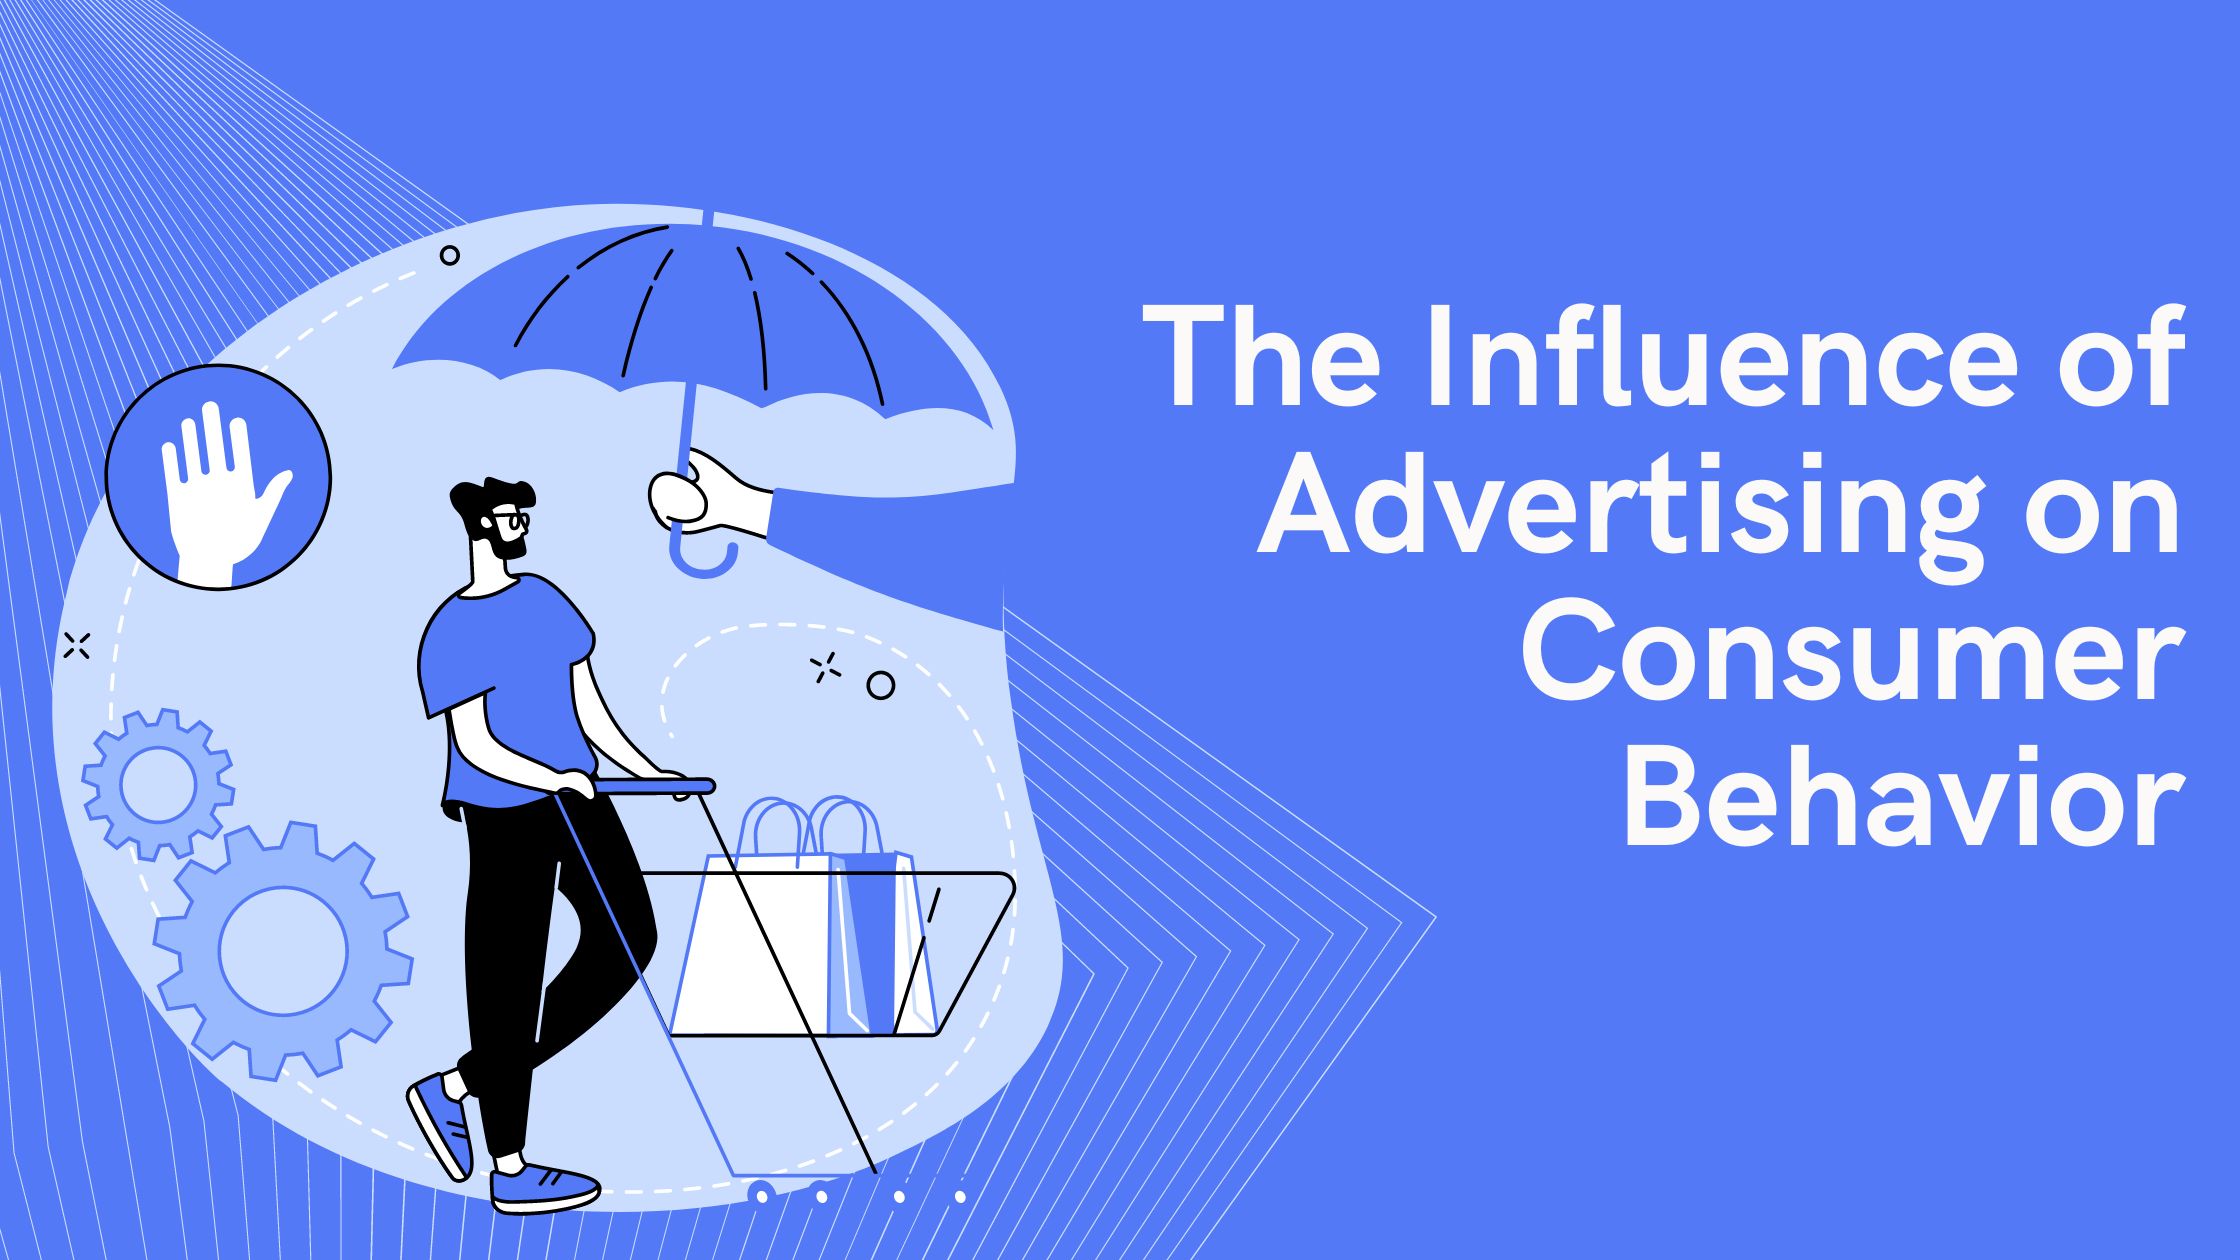 The influence of advertising on consumer behavior